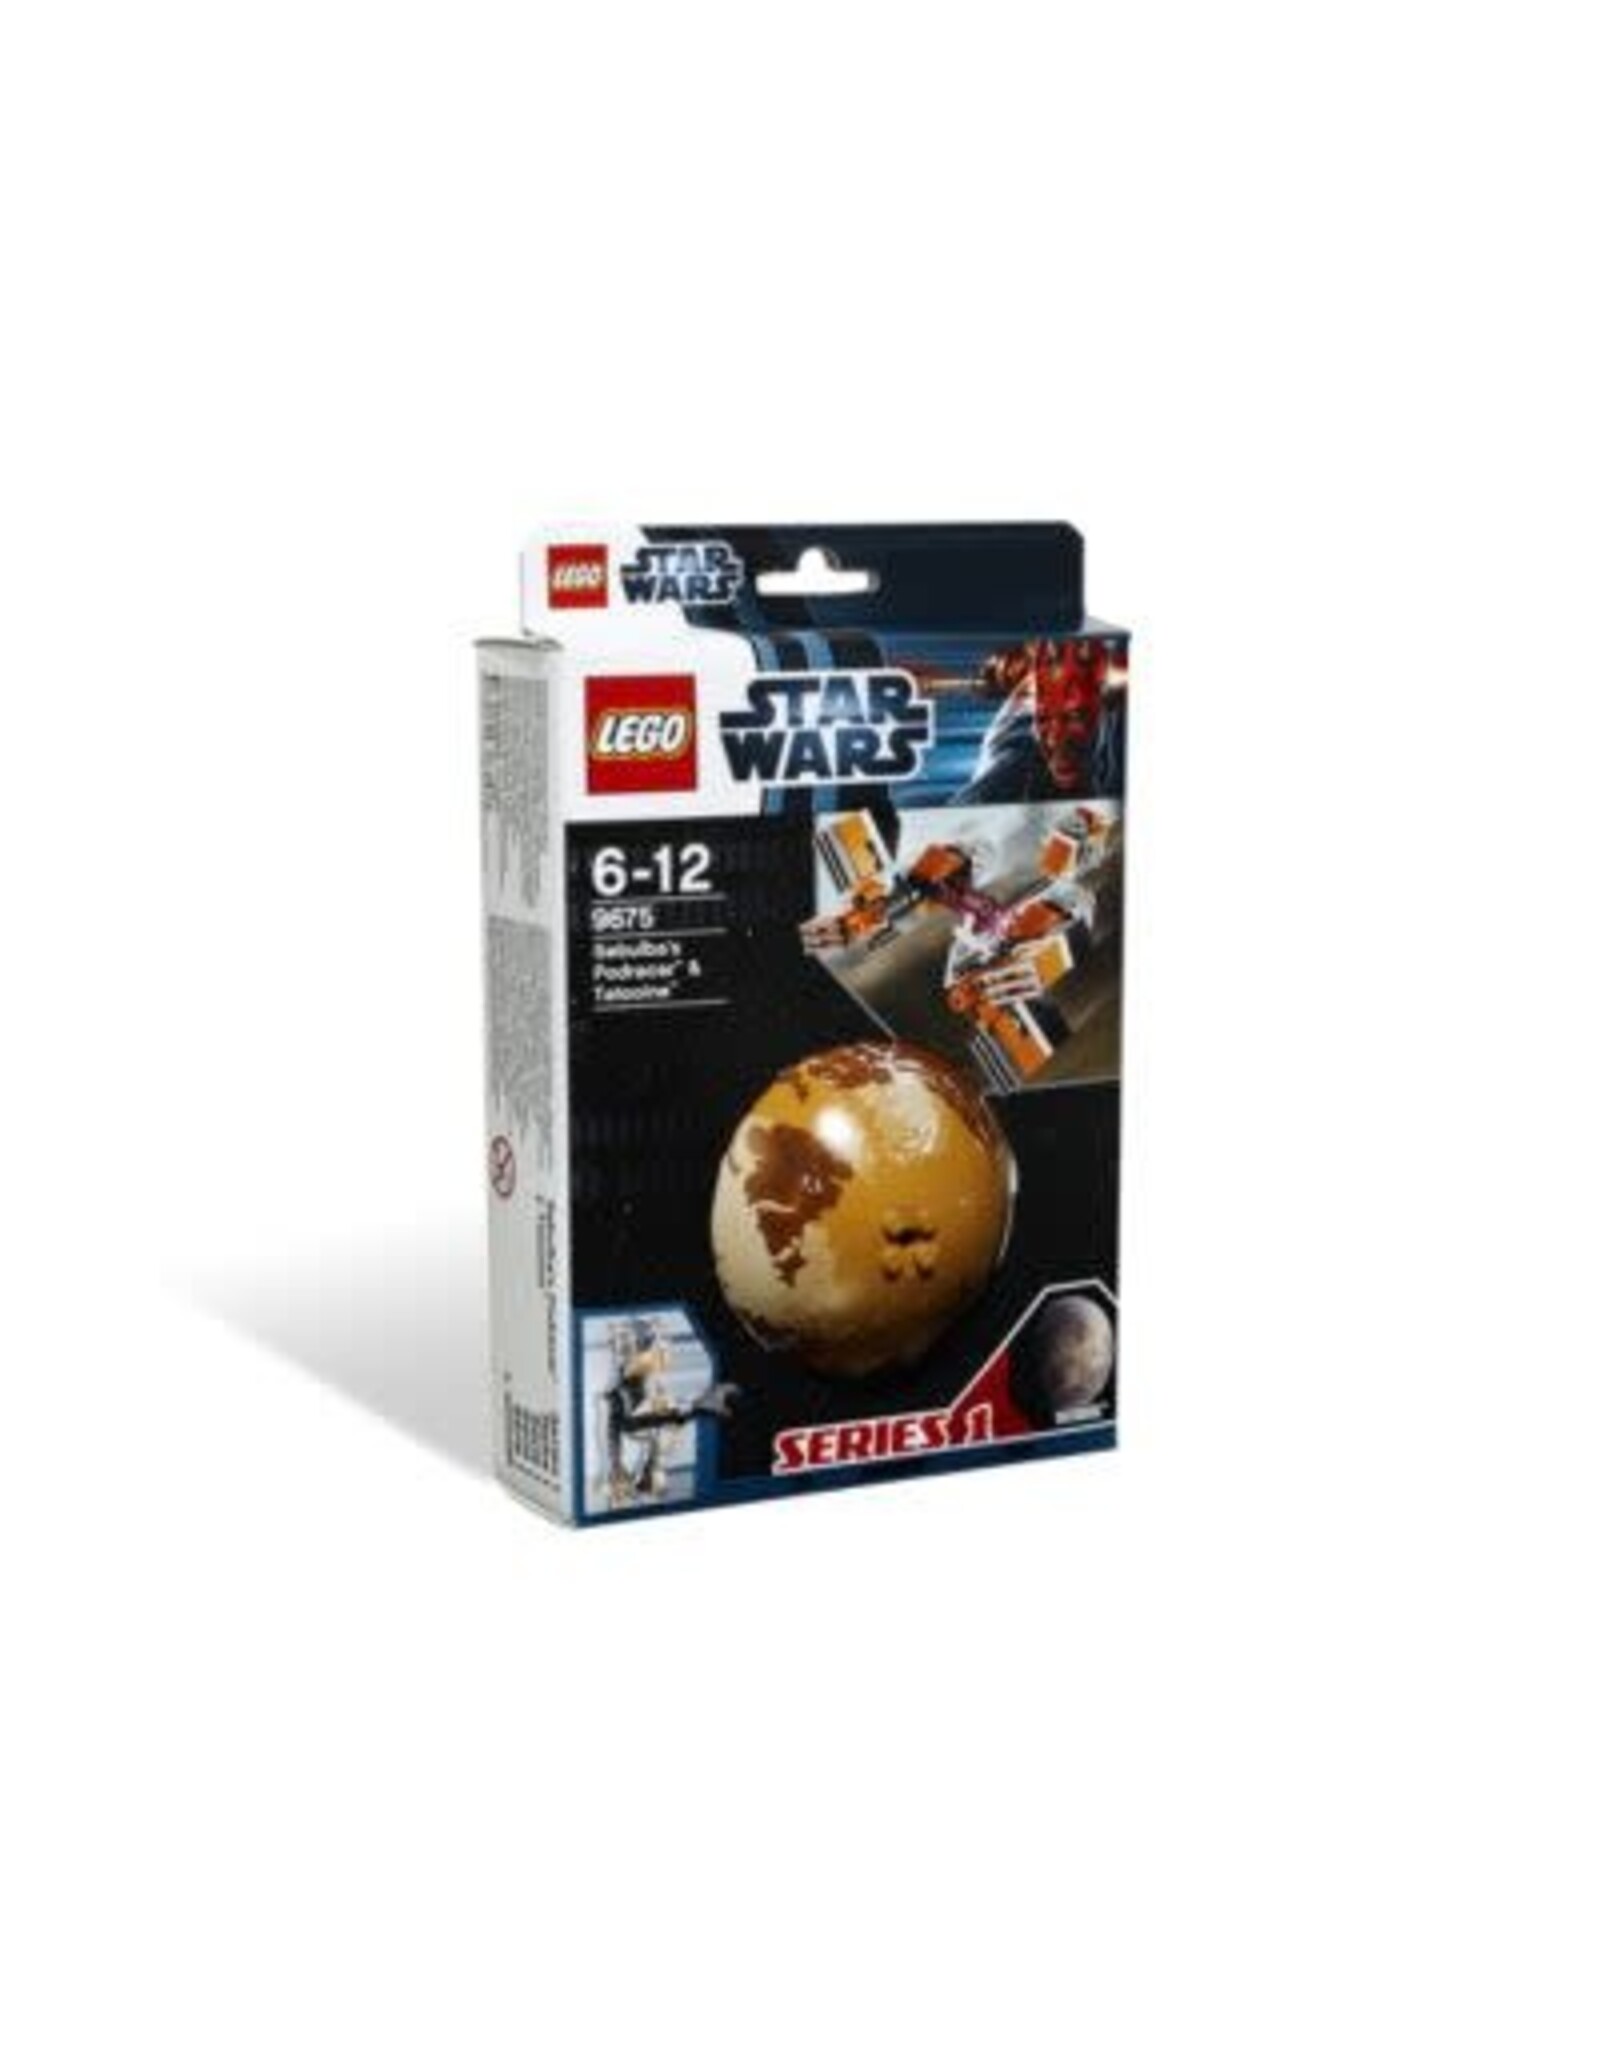 LEGO Lego Star Wars 9675 Sebulba’s Podracer & Tatooine